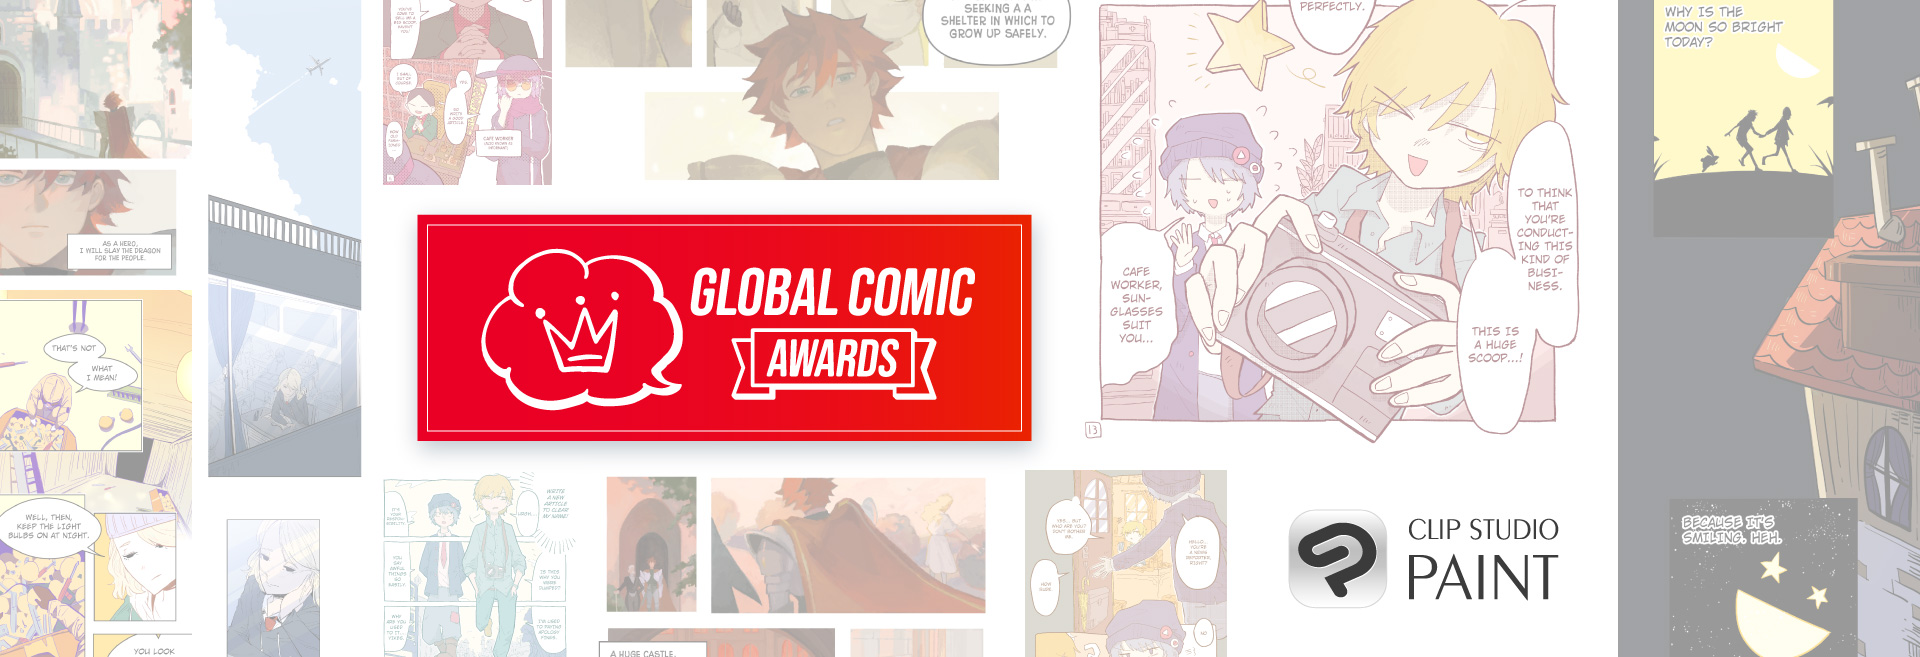 Global Comic Awards